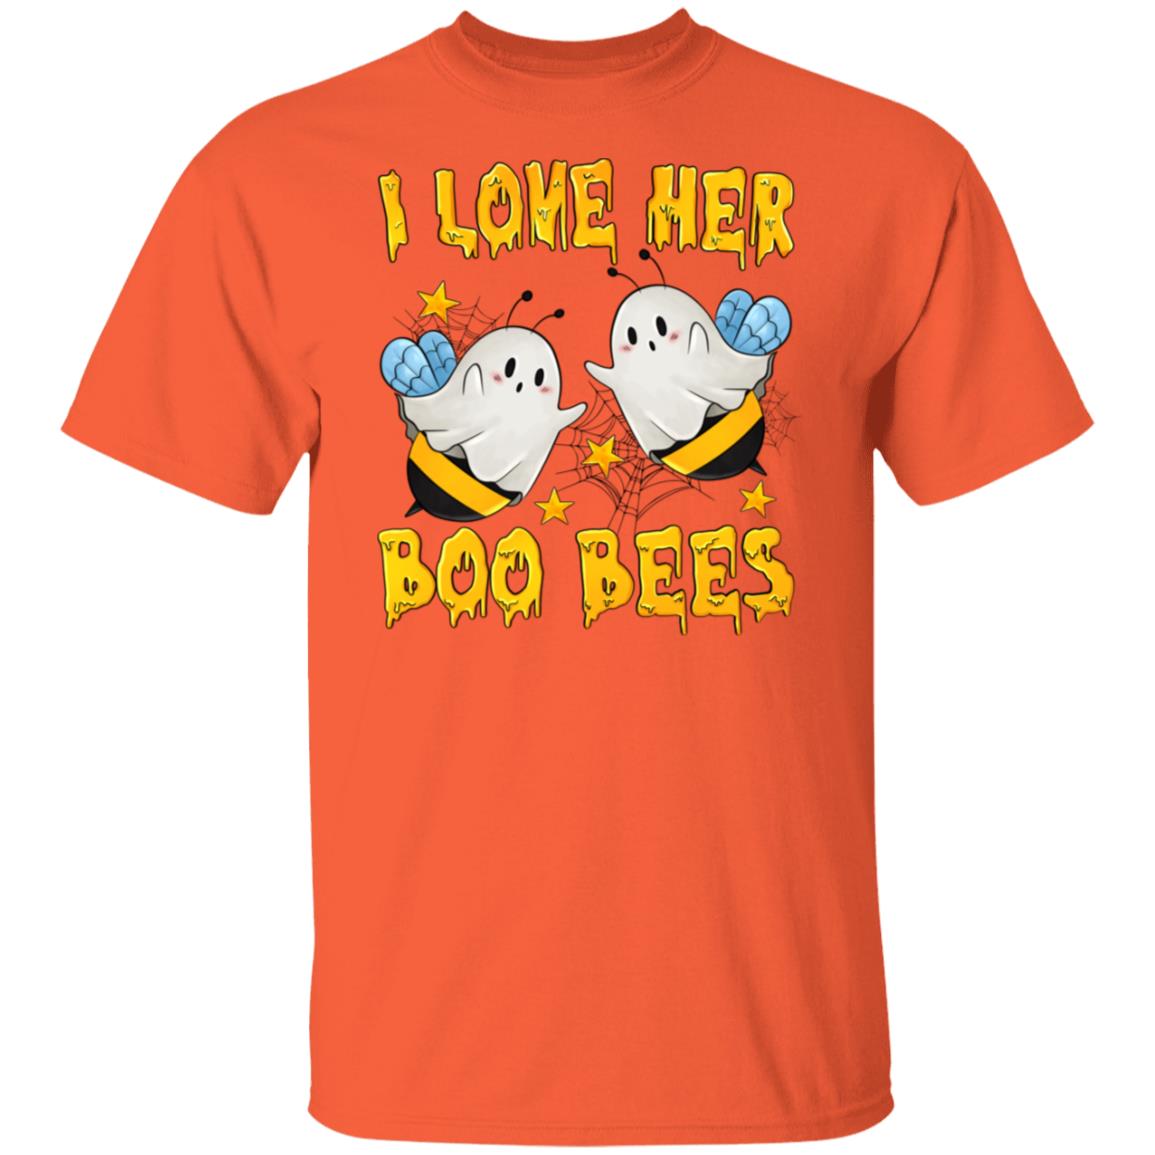 I love her BOO BEES (Halloween) -G500 5.3 oz. T-Shirt